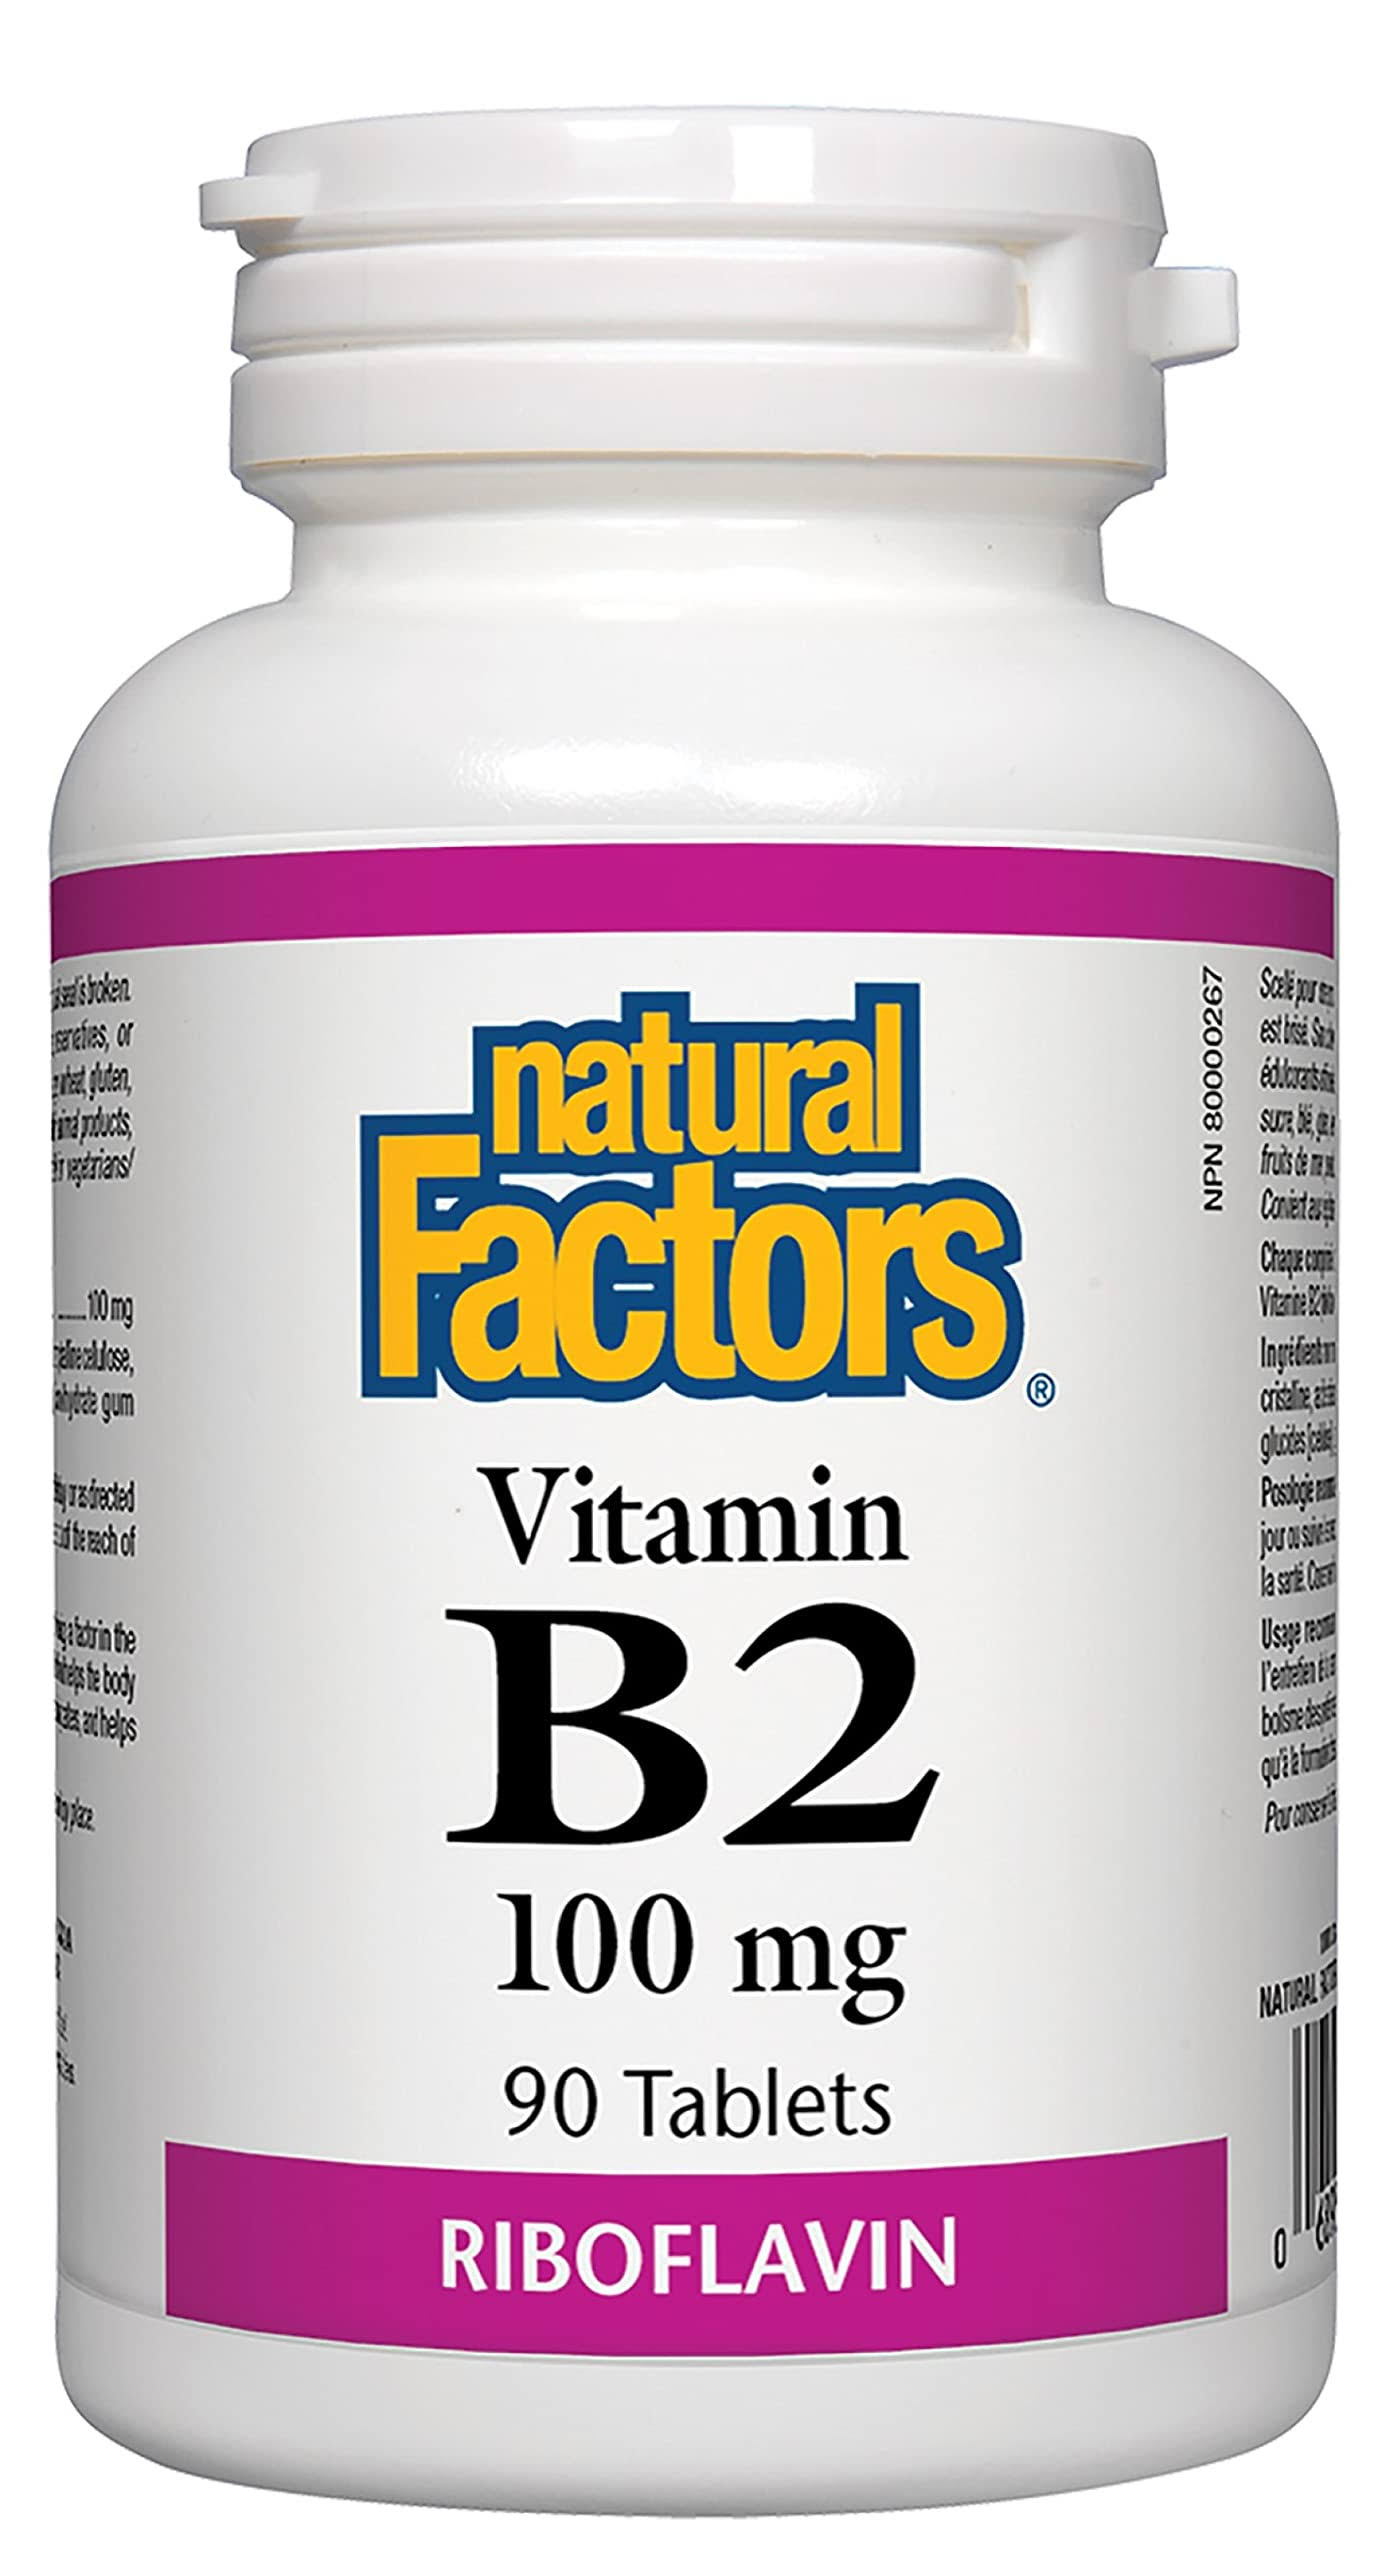 Natural Factors - Vitamin B2 100 mg 90 Tablets